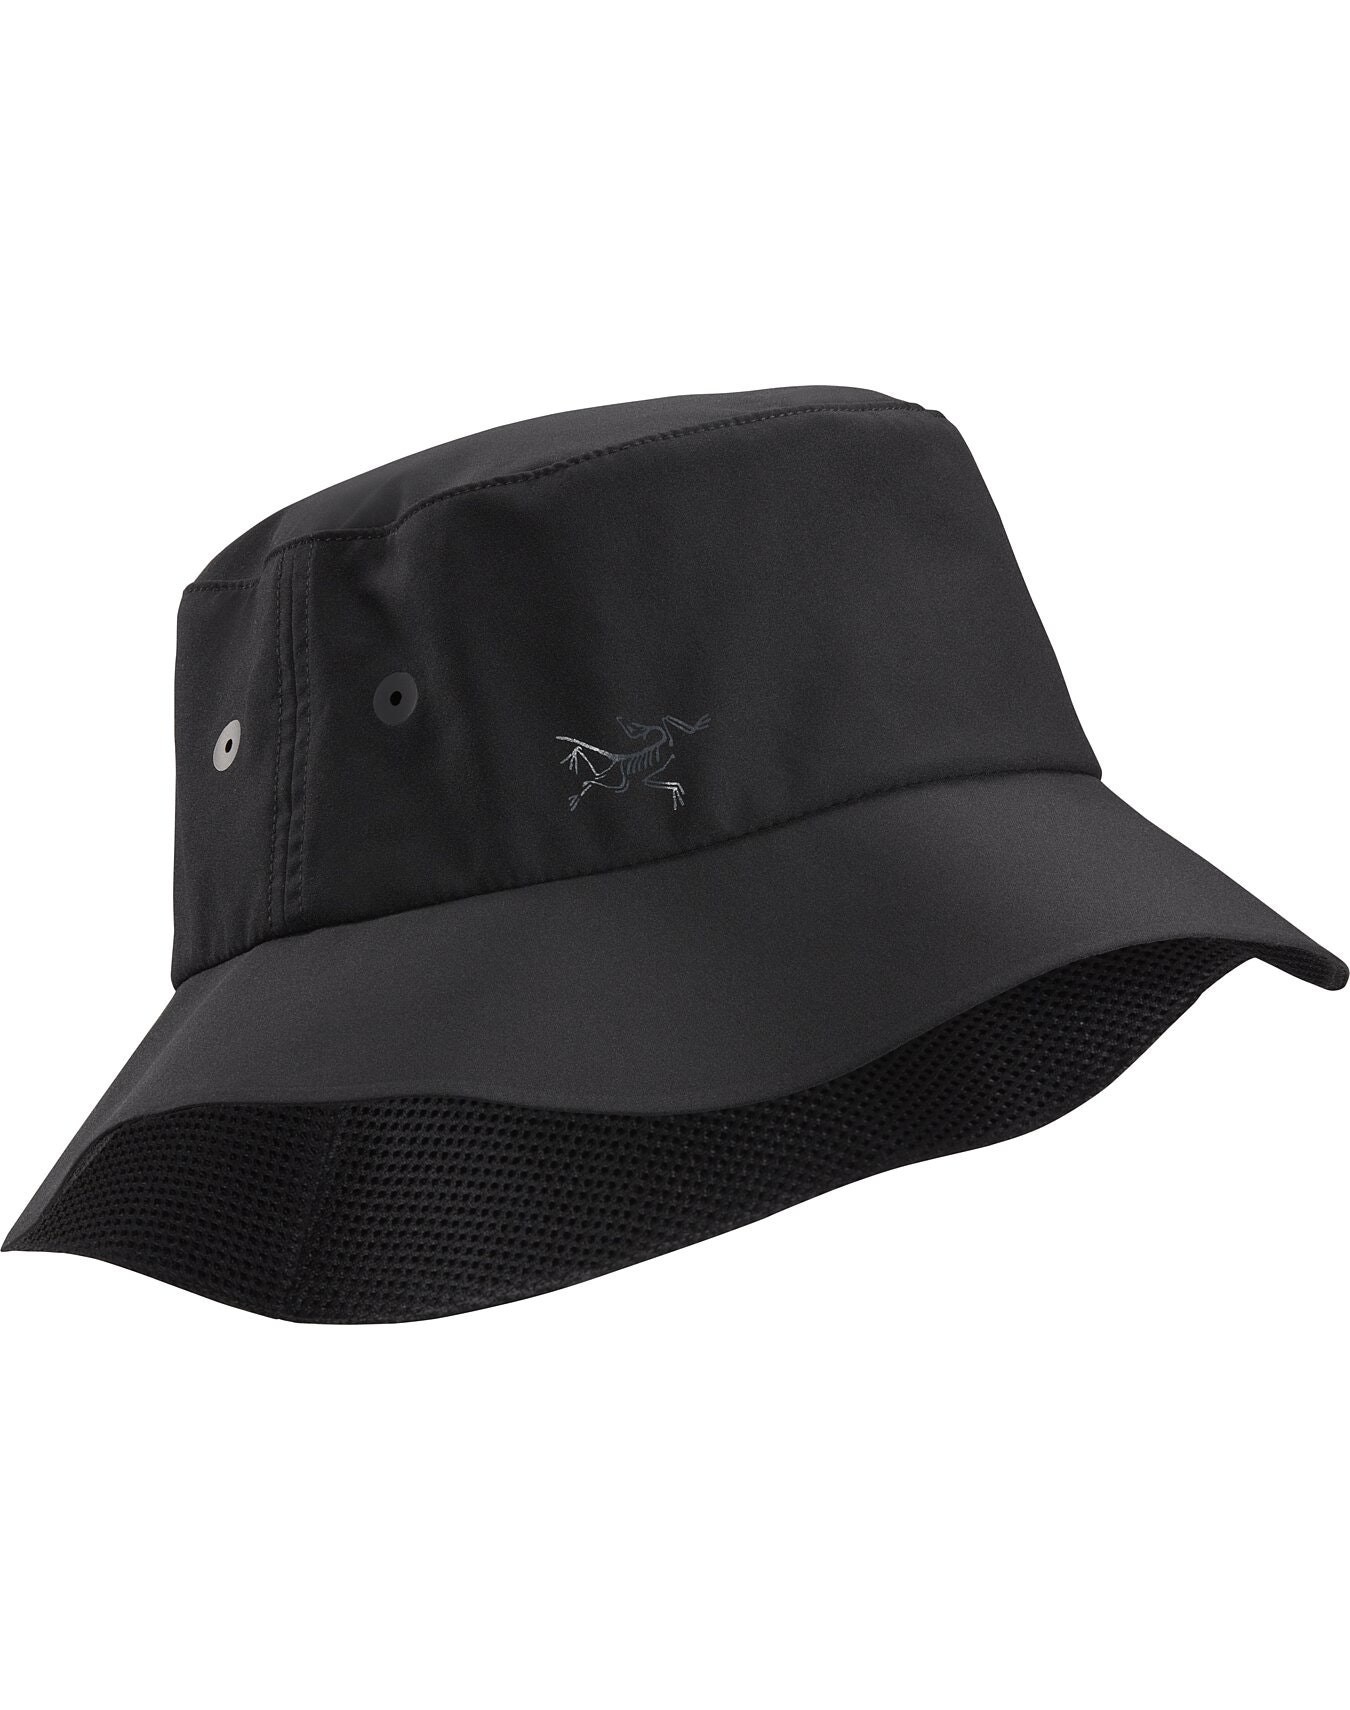 Sinsolo Bucket Hat Size L/XL Sun Cap Summer Black Travel Beach Outdoor Men UPF 50+ - 1